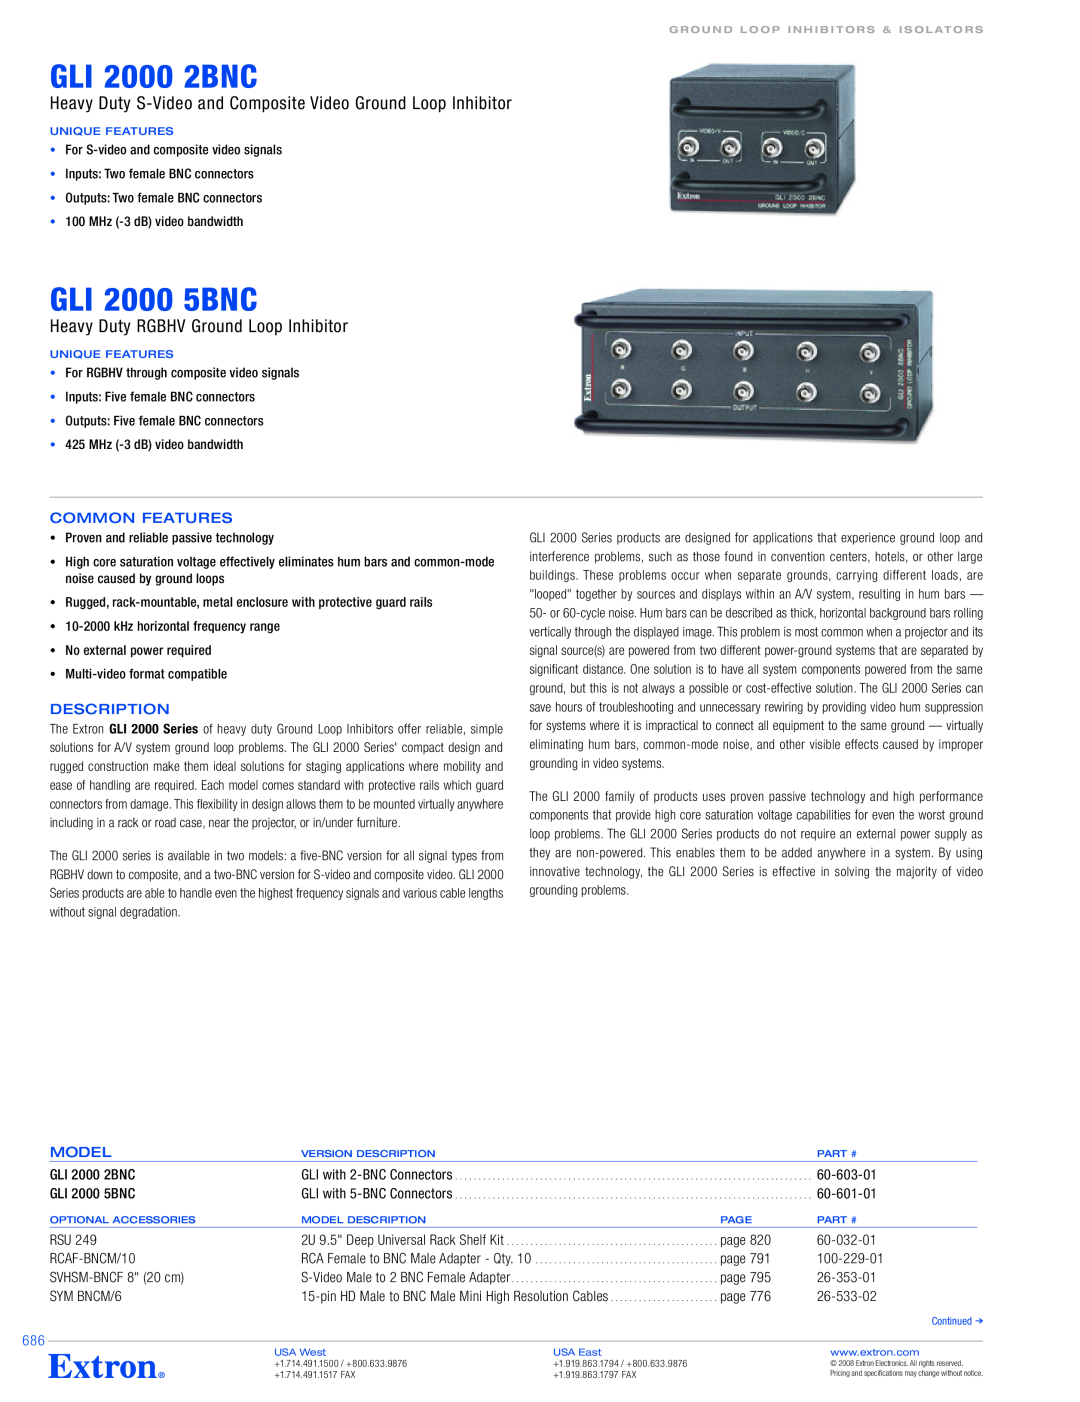 Extron electronic GLI 2000 2BNC specifications Common Features, Description, Model, GLI 2000 5BNC 